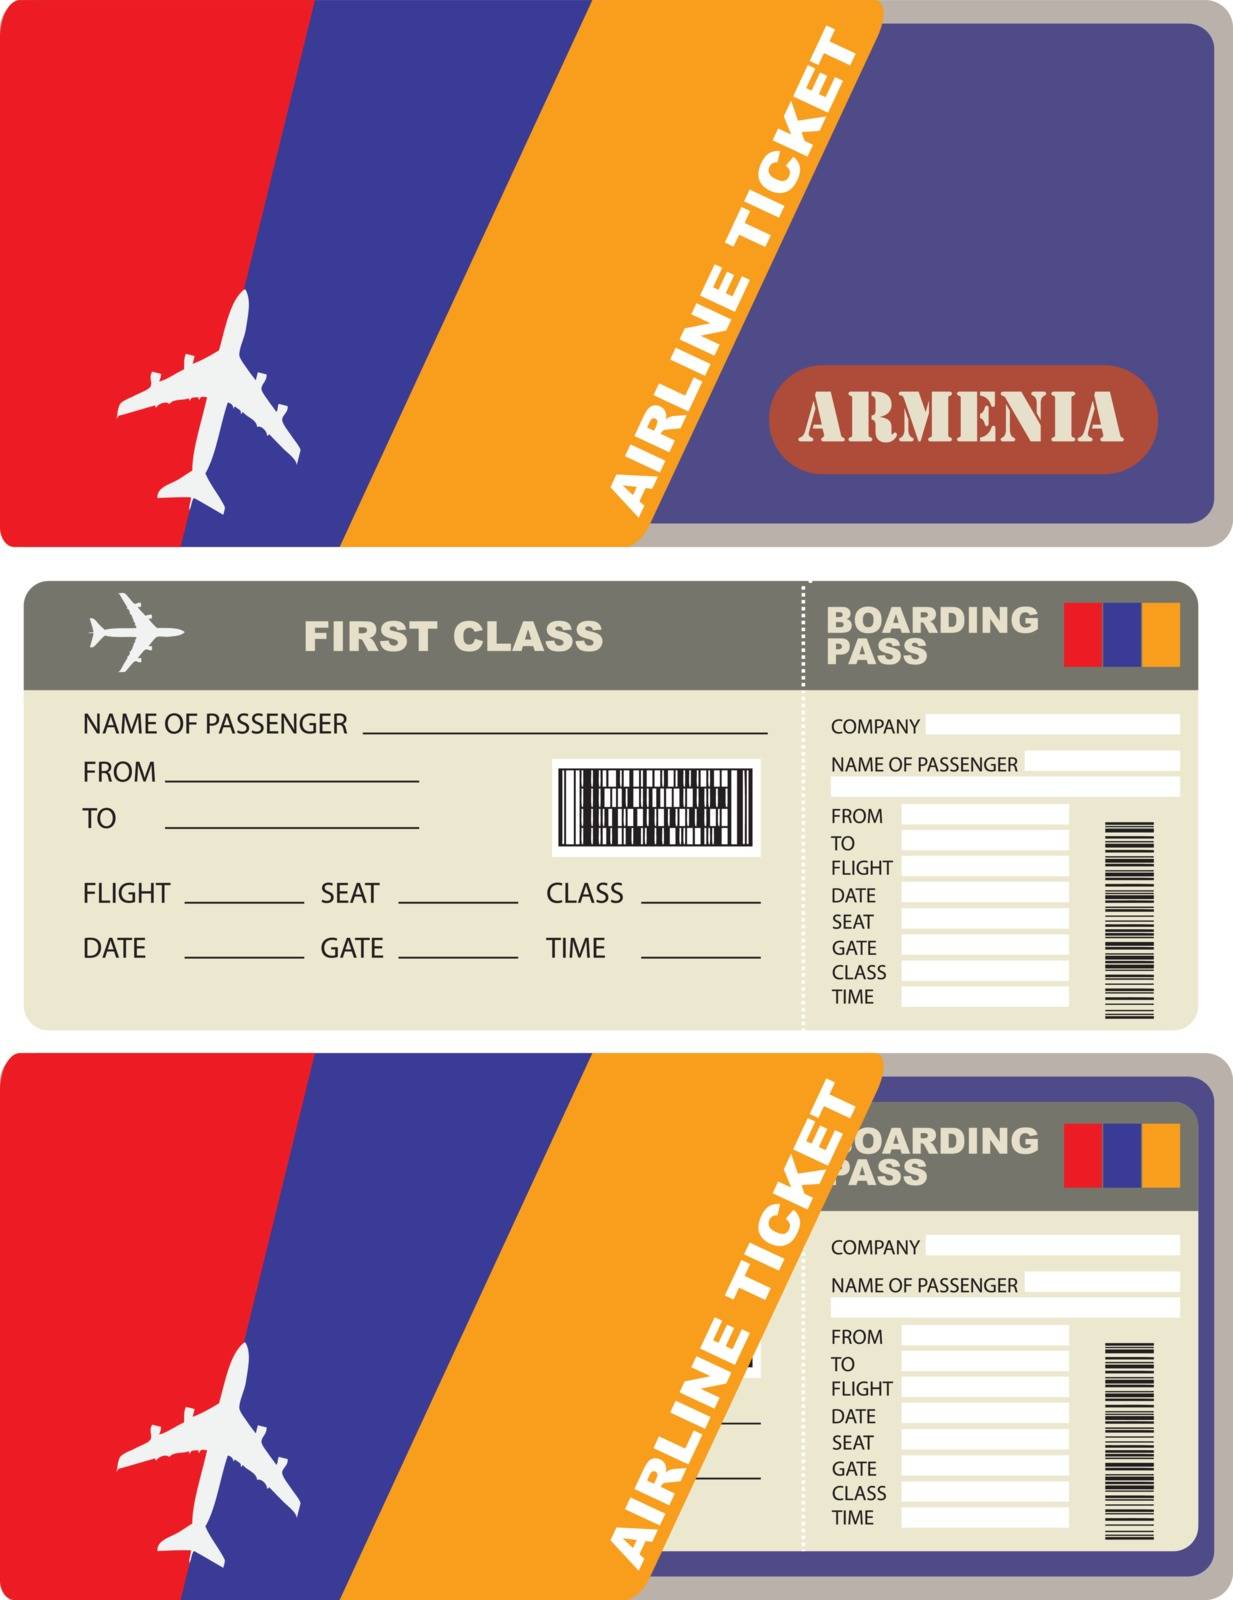 Flight trip for a flight to Armenia by VIPDesignUSA